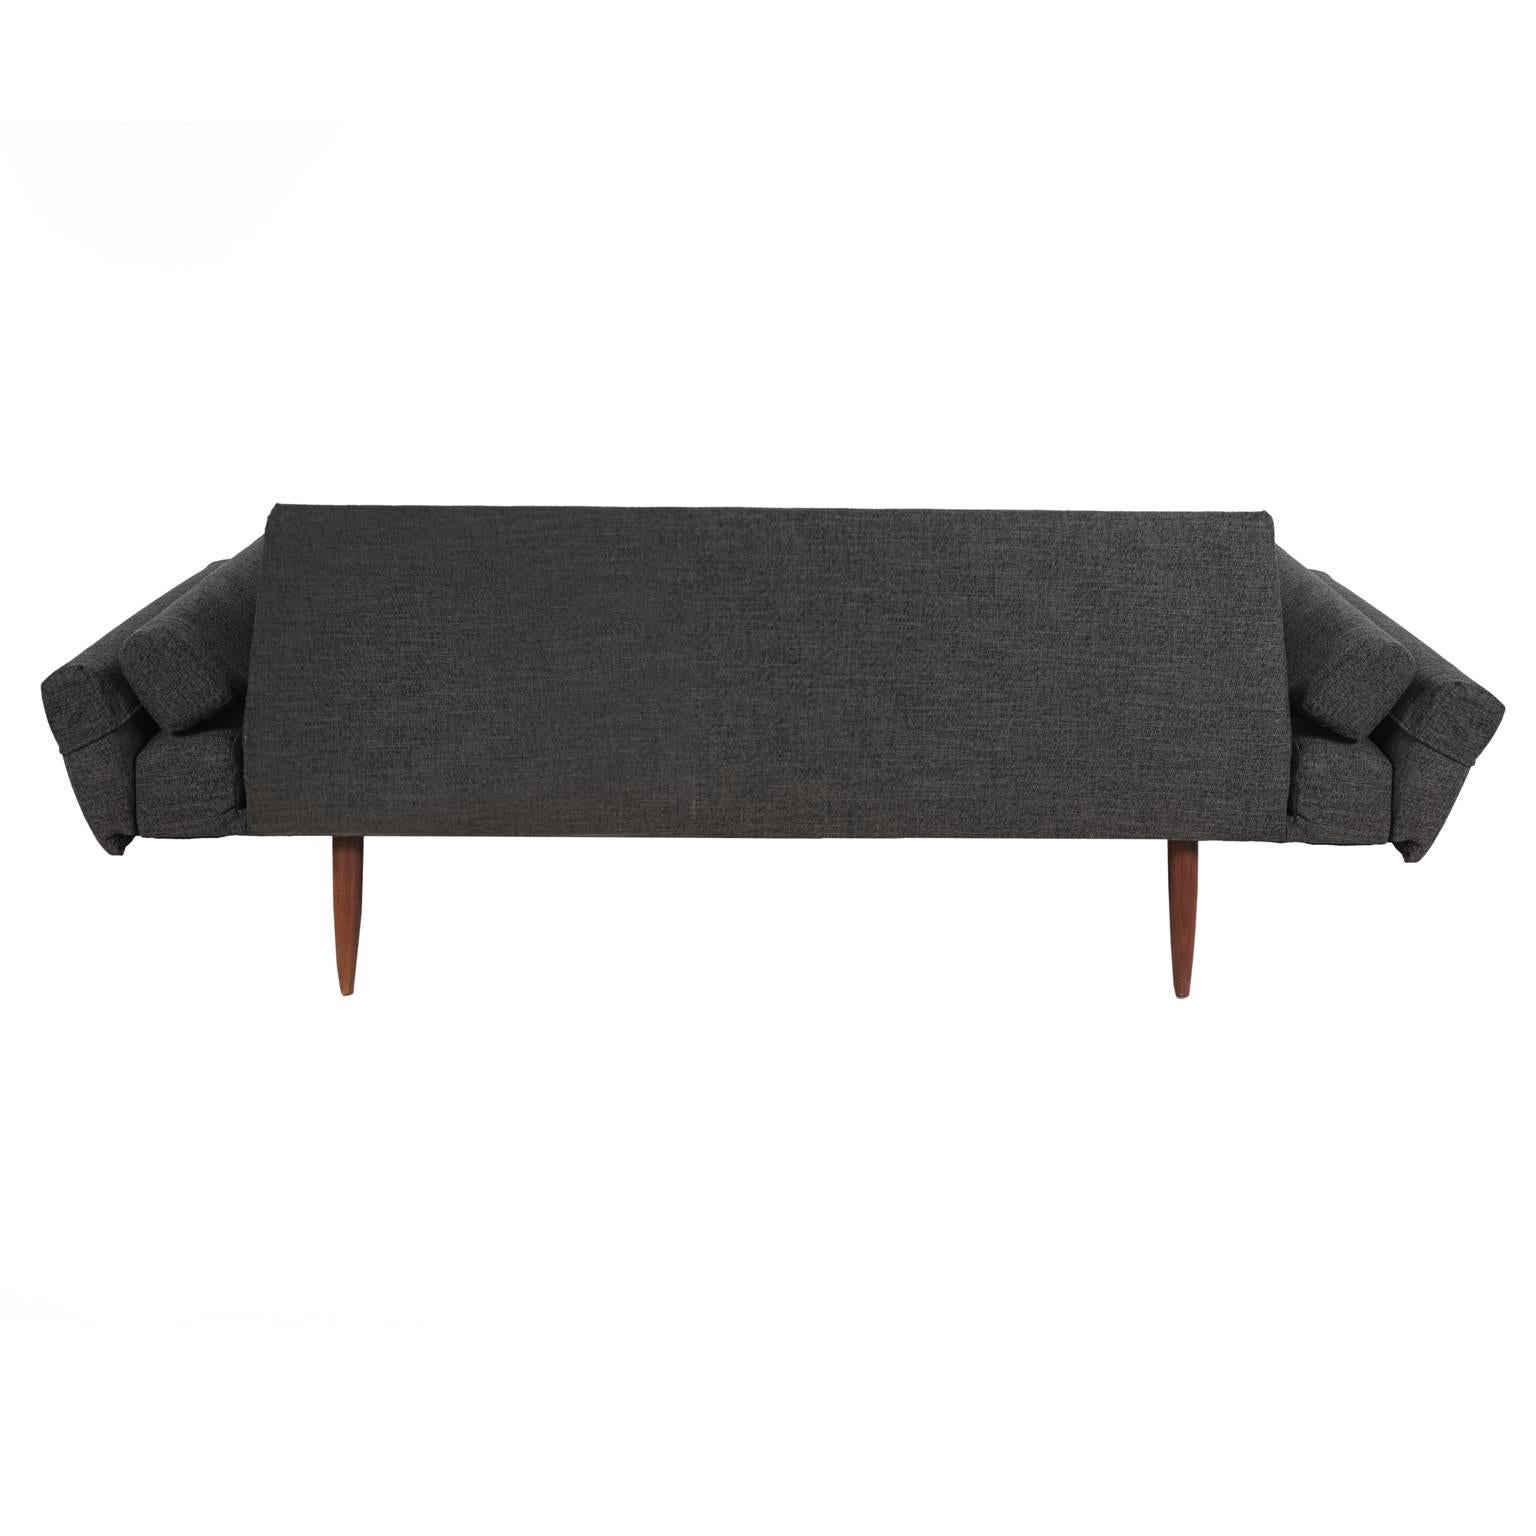 Upholstery Adrian Pearsall Mid-Century Modern Sofa 